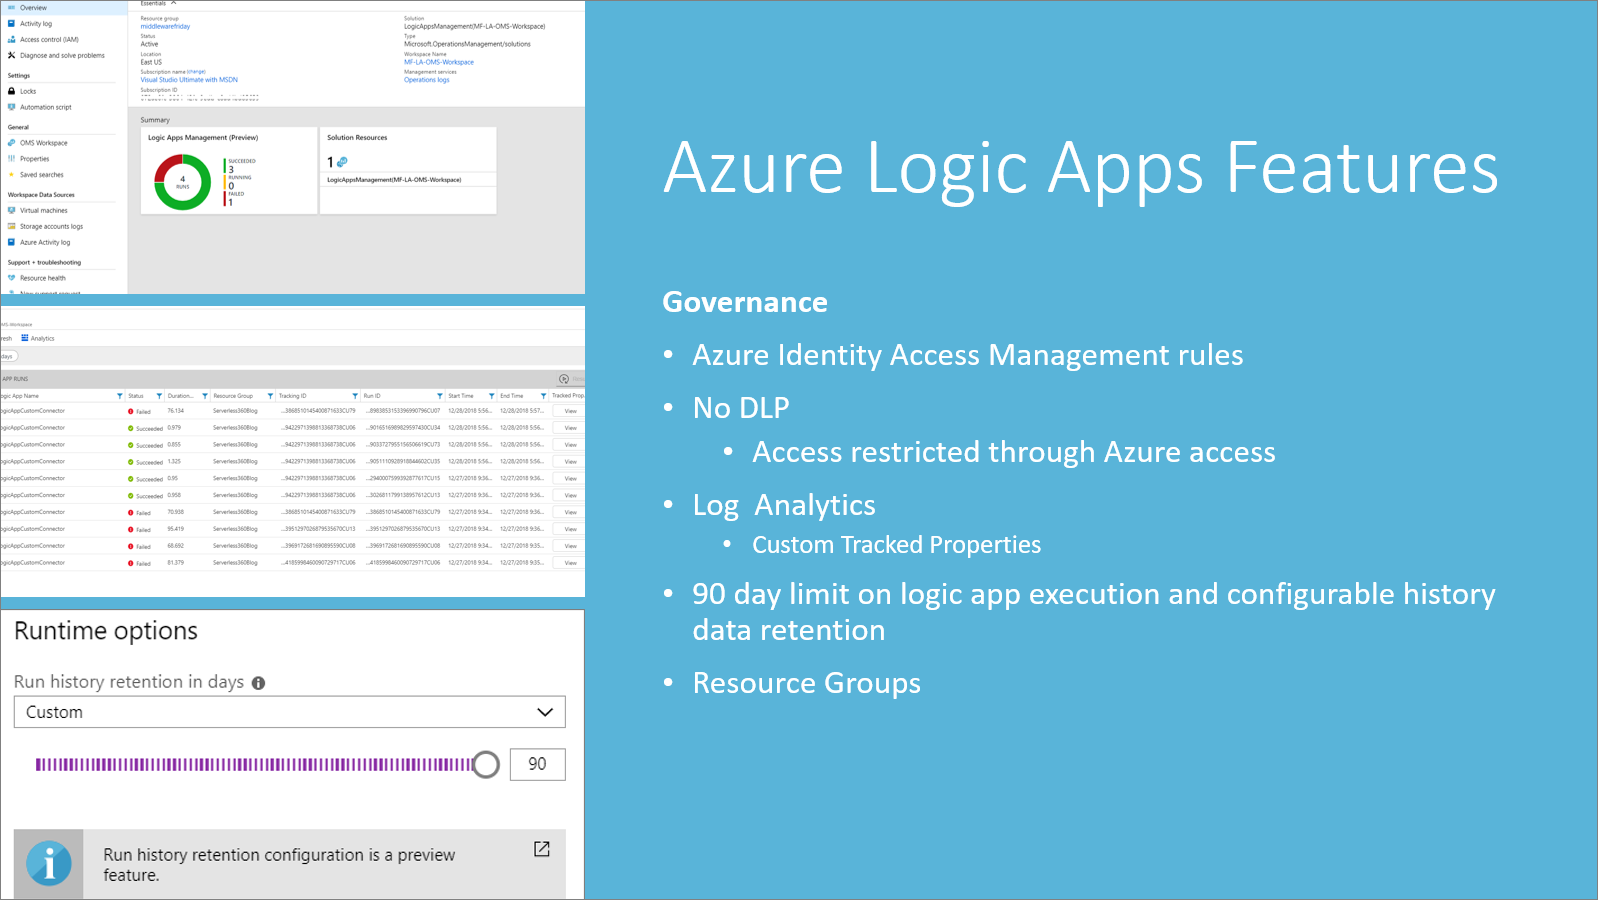 Azure Logic Apps Features